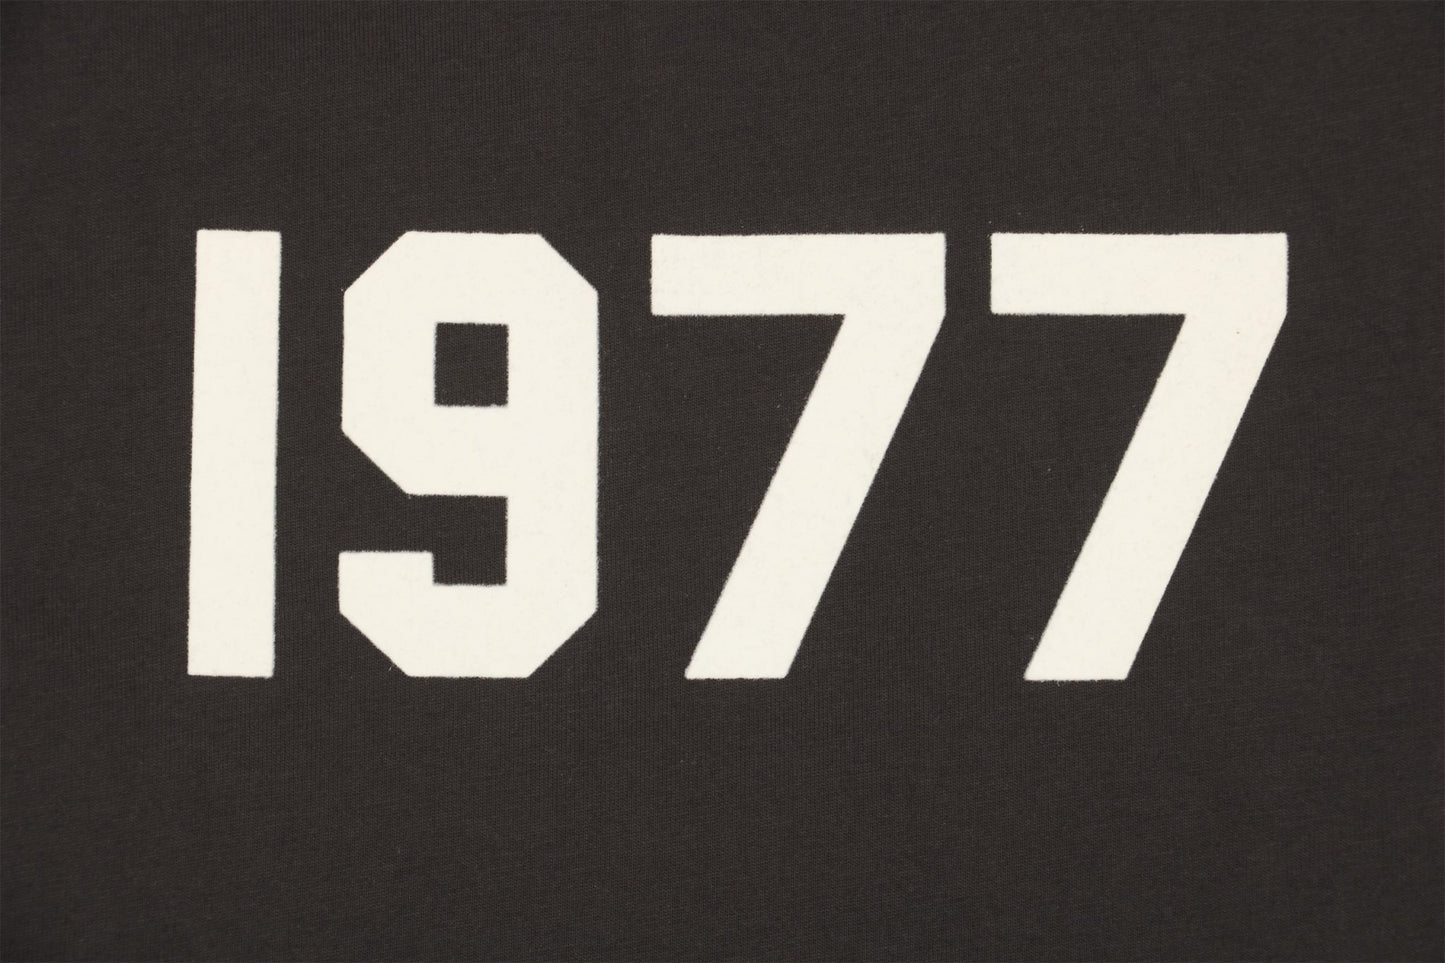 FOG Black 1977 E55ential5 T-Shirt